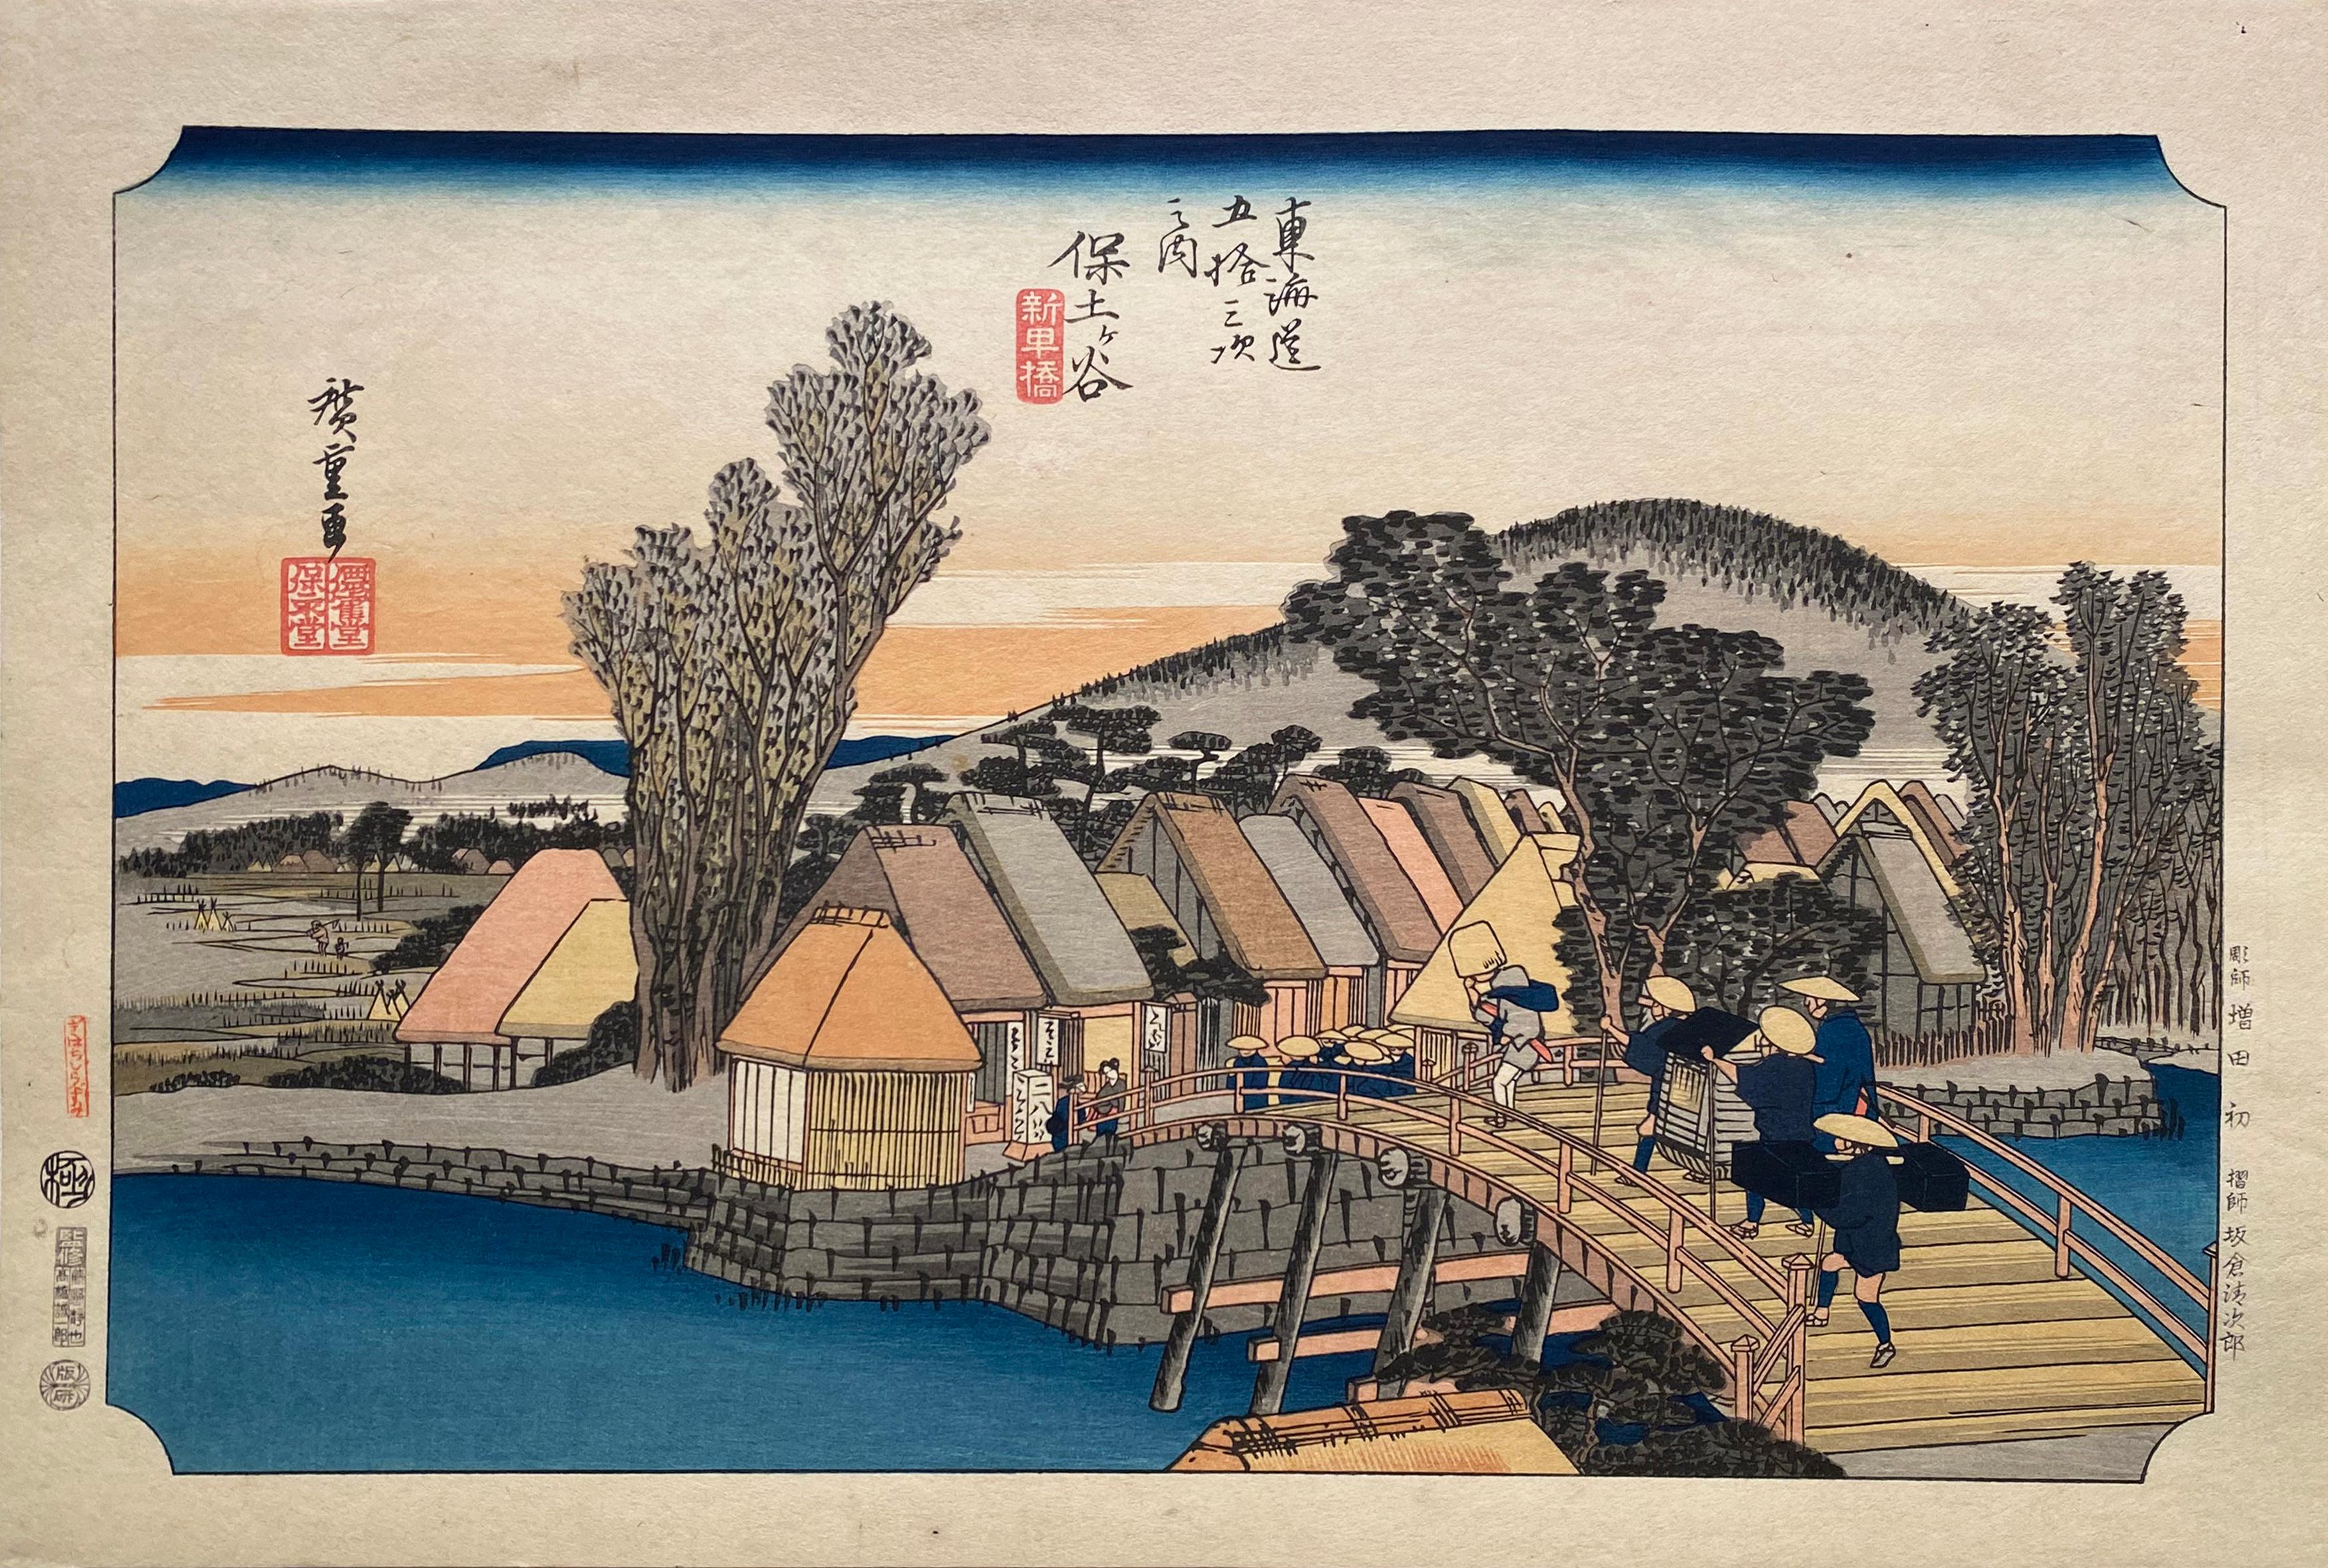 Shinmachi-Brücke", nach Utagawa Hiroshige 歌川廣重, Ukiyo-e Holzschnitt, Tokaido